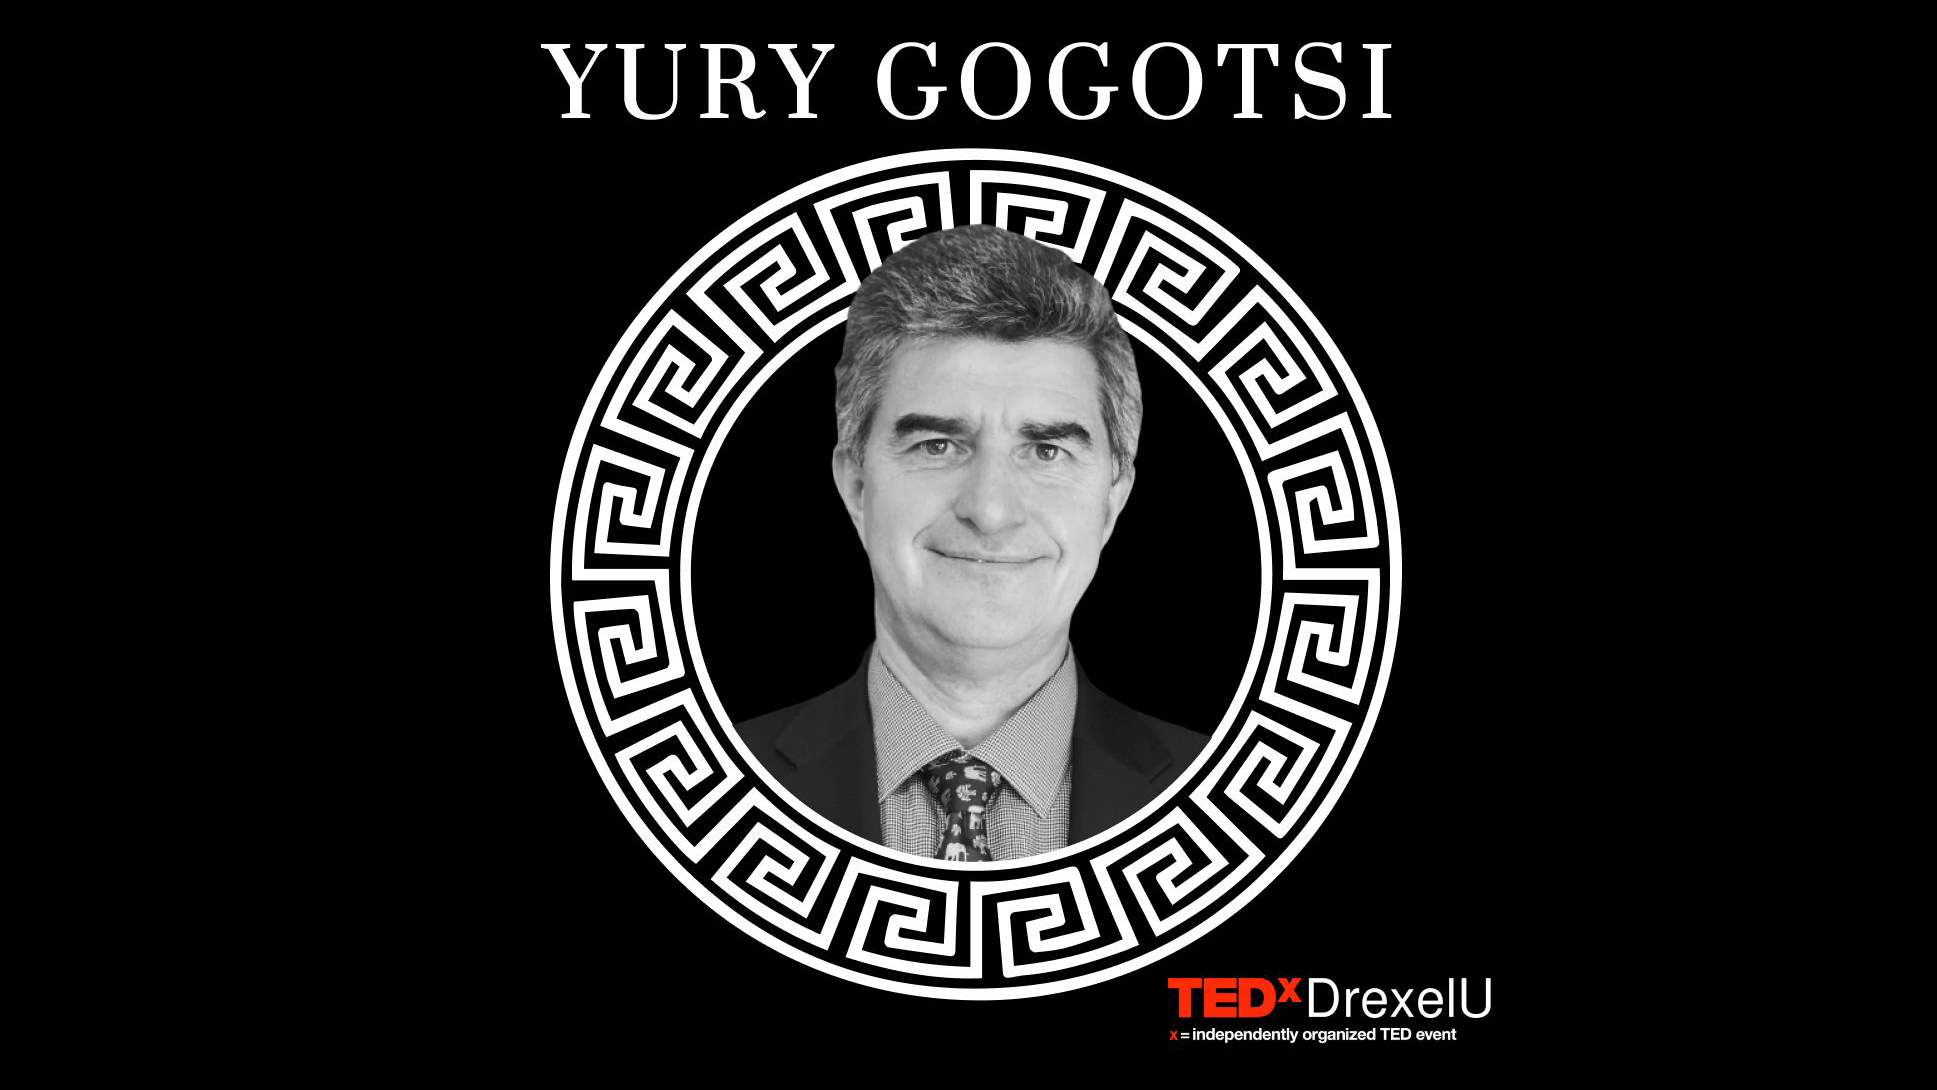 Professor Yury Gogotsi Giving TED Talk at TEDxDrexelU Conference